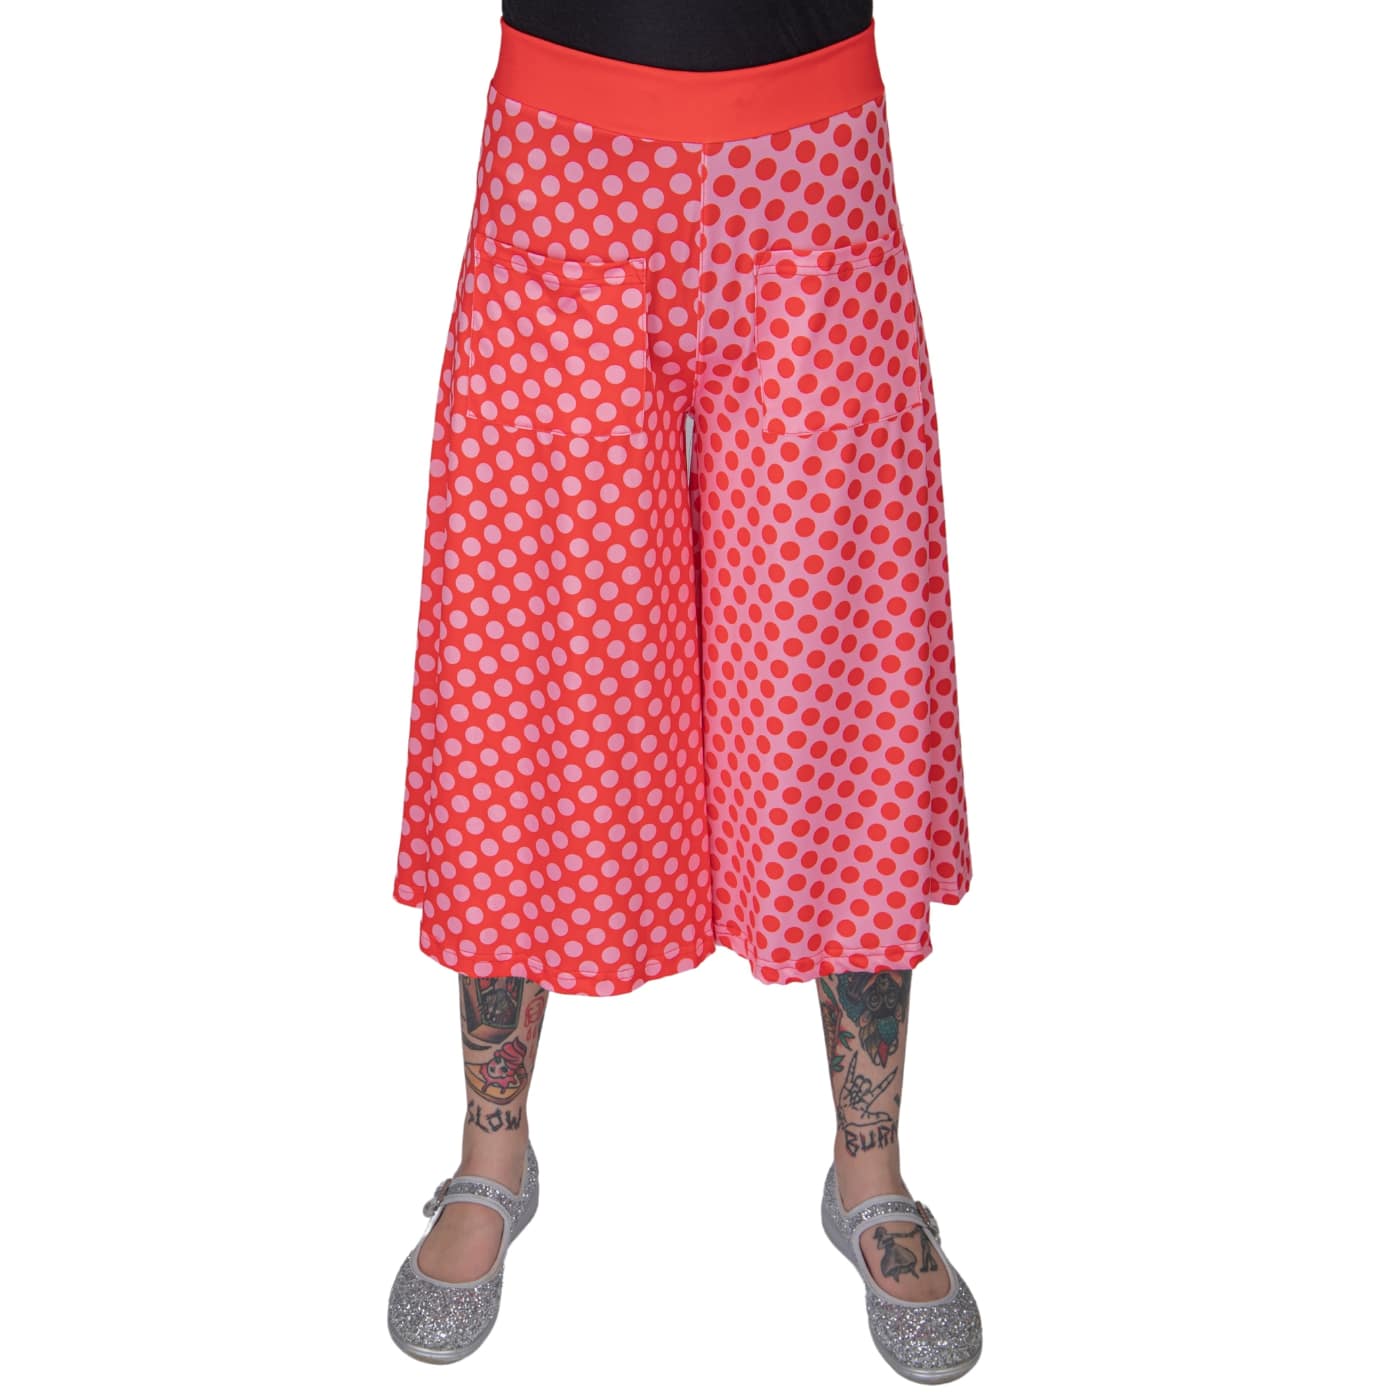 Blush Culottes by RainbowsAndFairies.com.au (Red Polka Dots - Pink Polka Dots - Pink & Red - 3 Quarter Pants - Wide Leg Pants - Vintage Inspired) - SKU: CL_CULTS_BLUSH_ORG - Pic-01